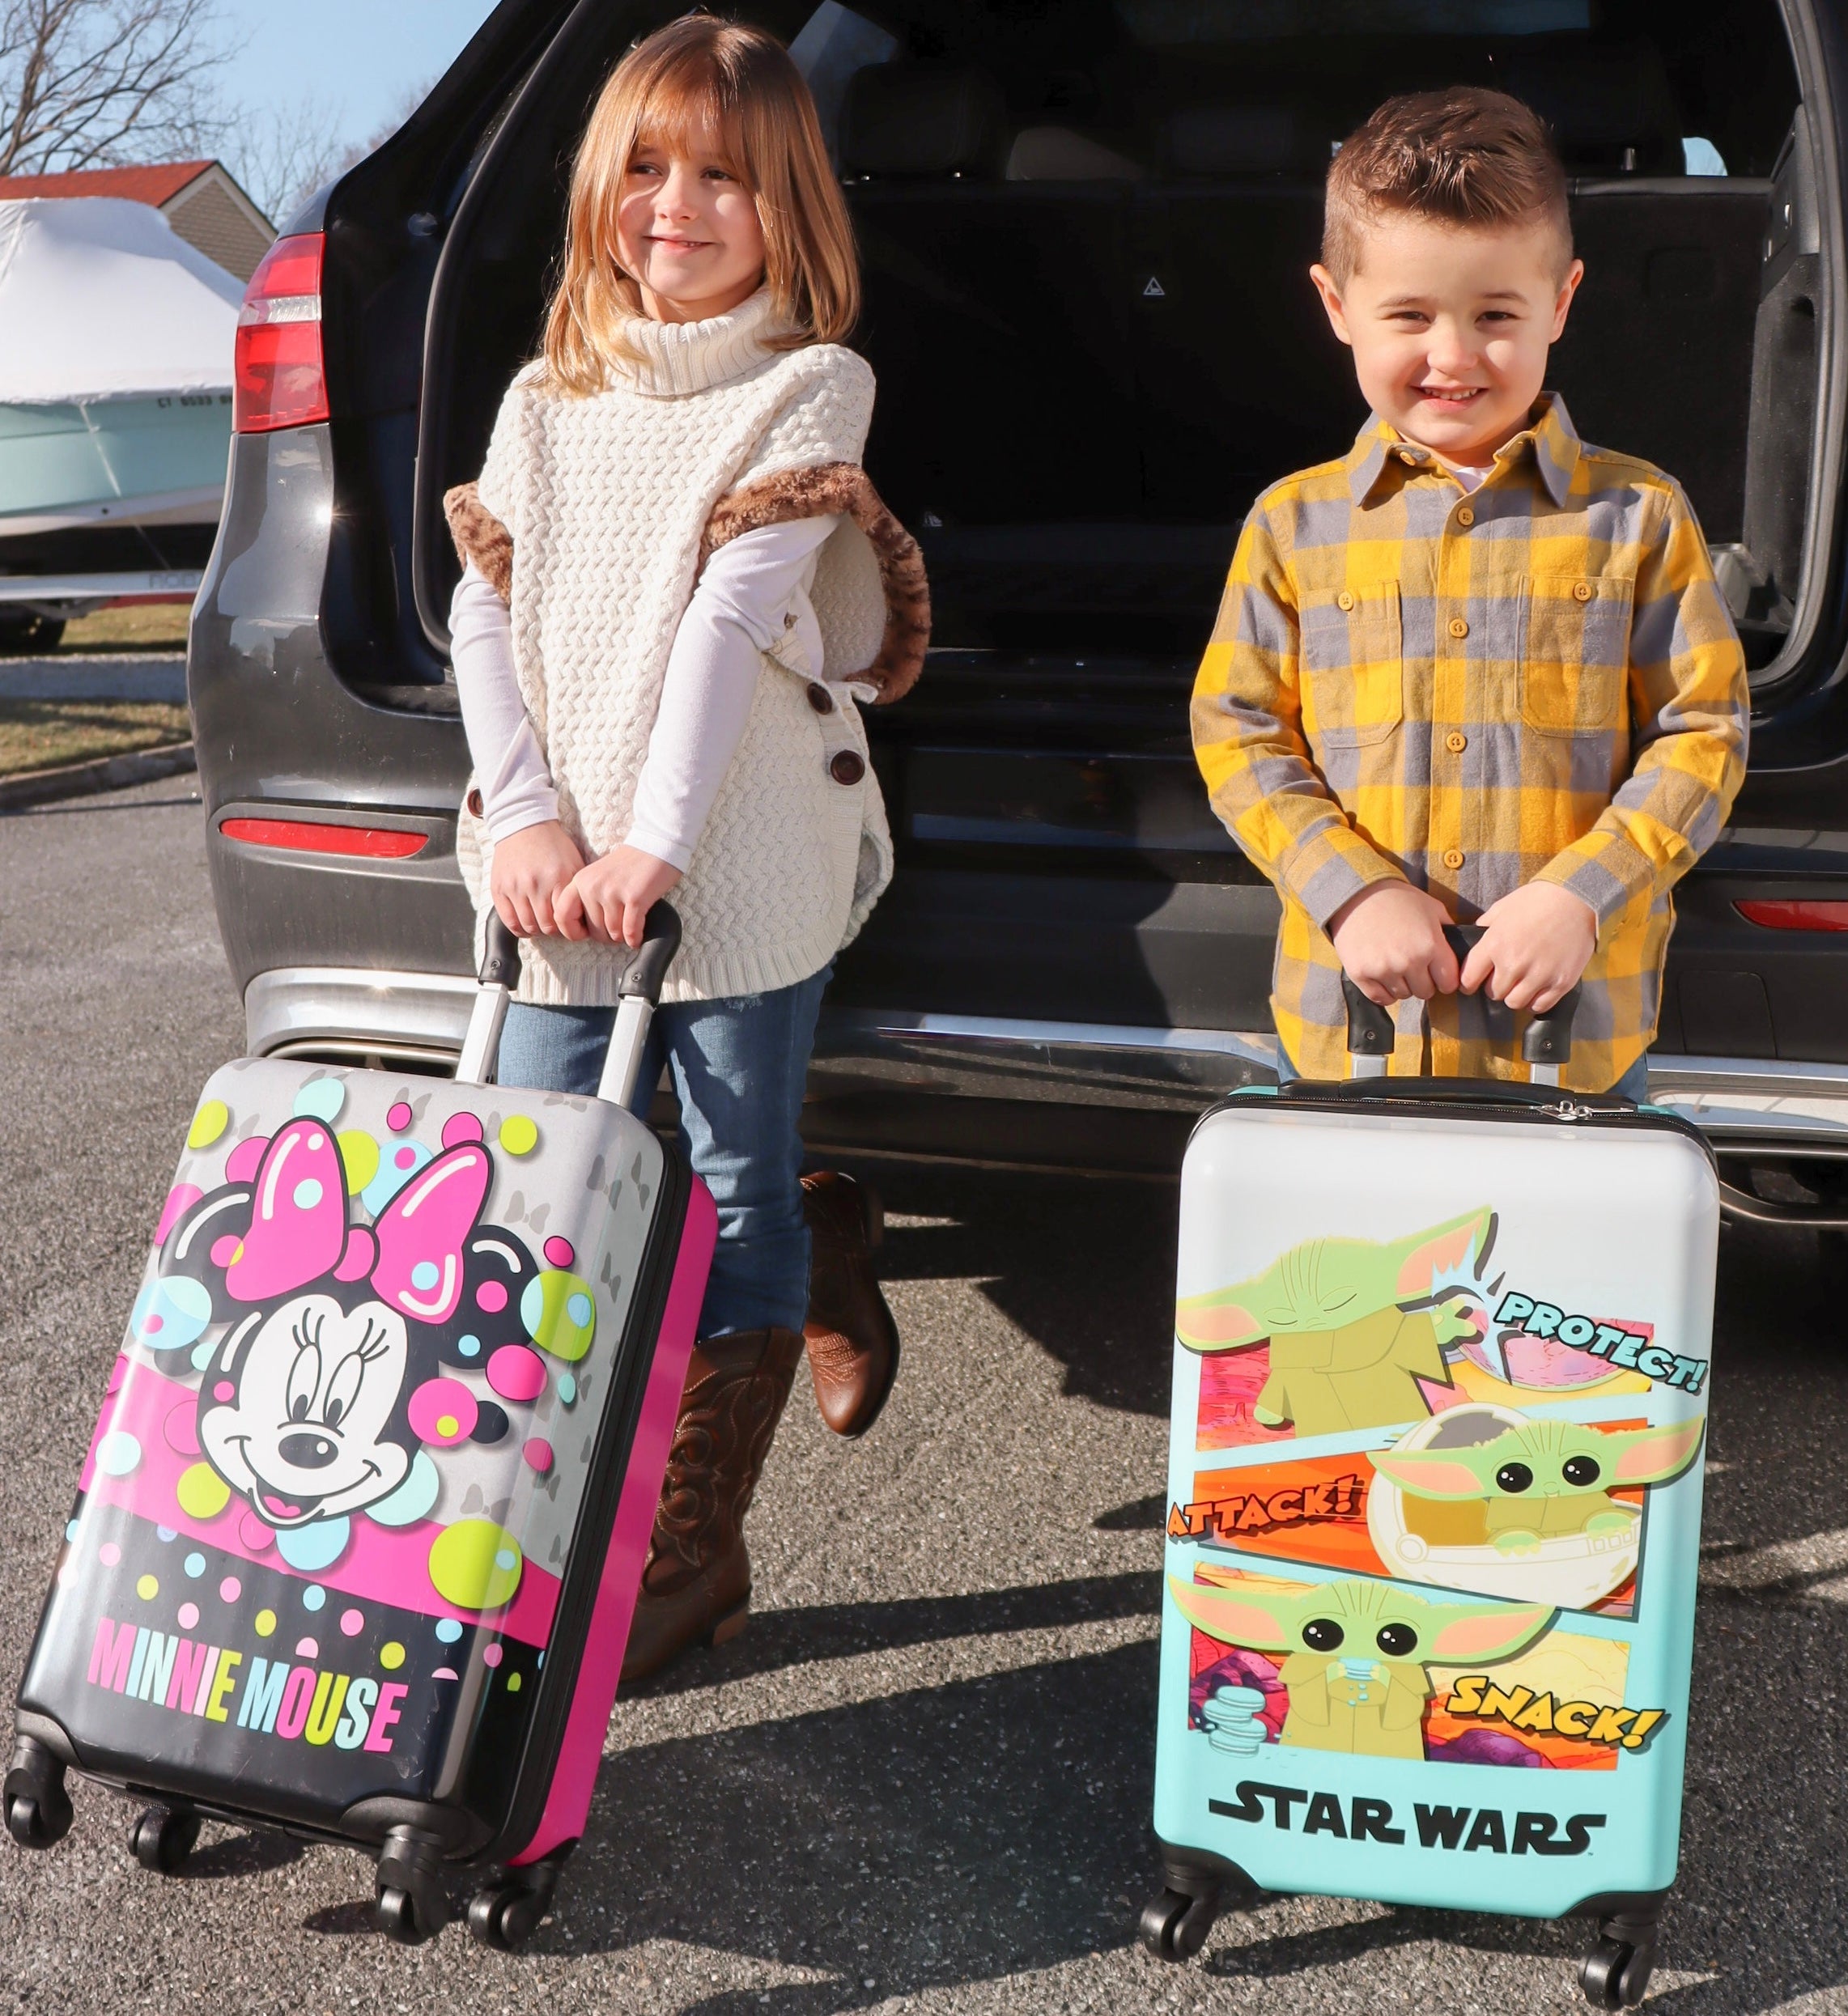 Children Rolling Luggage Spinner Wheels Suitcase Kids Cabin